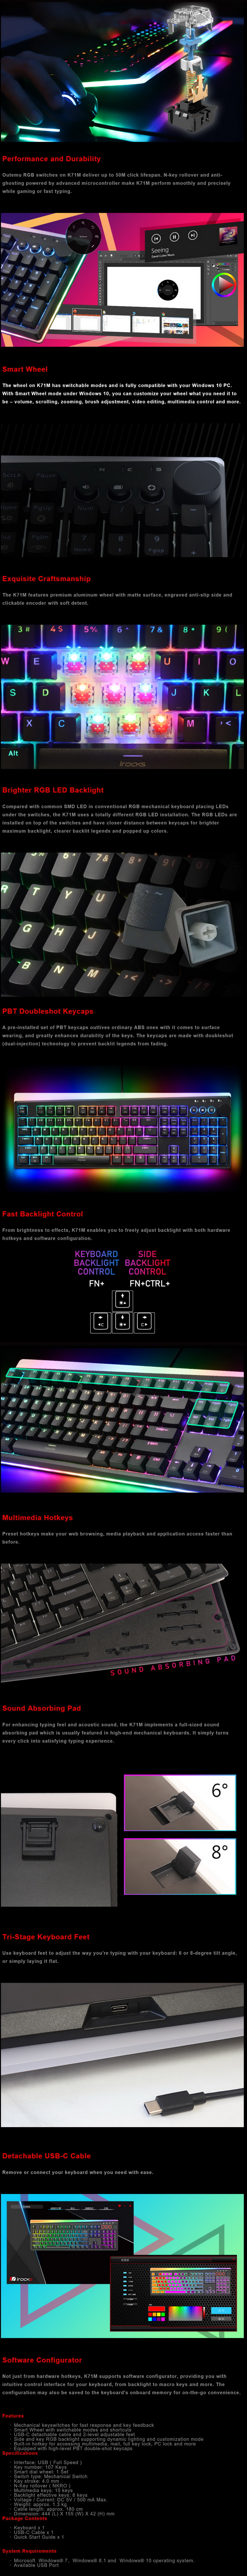 i-Rocks K71M RGB Illuminated Mechanical Keyboard Review